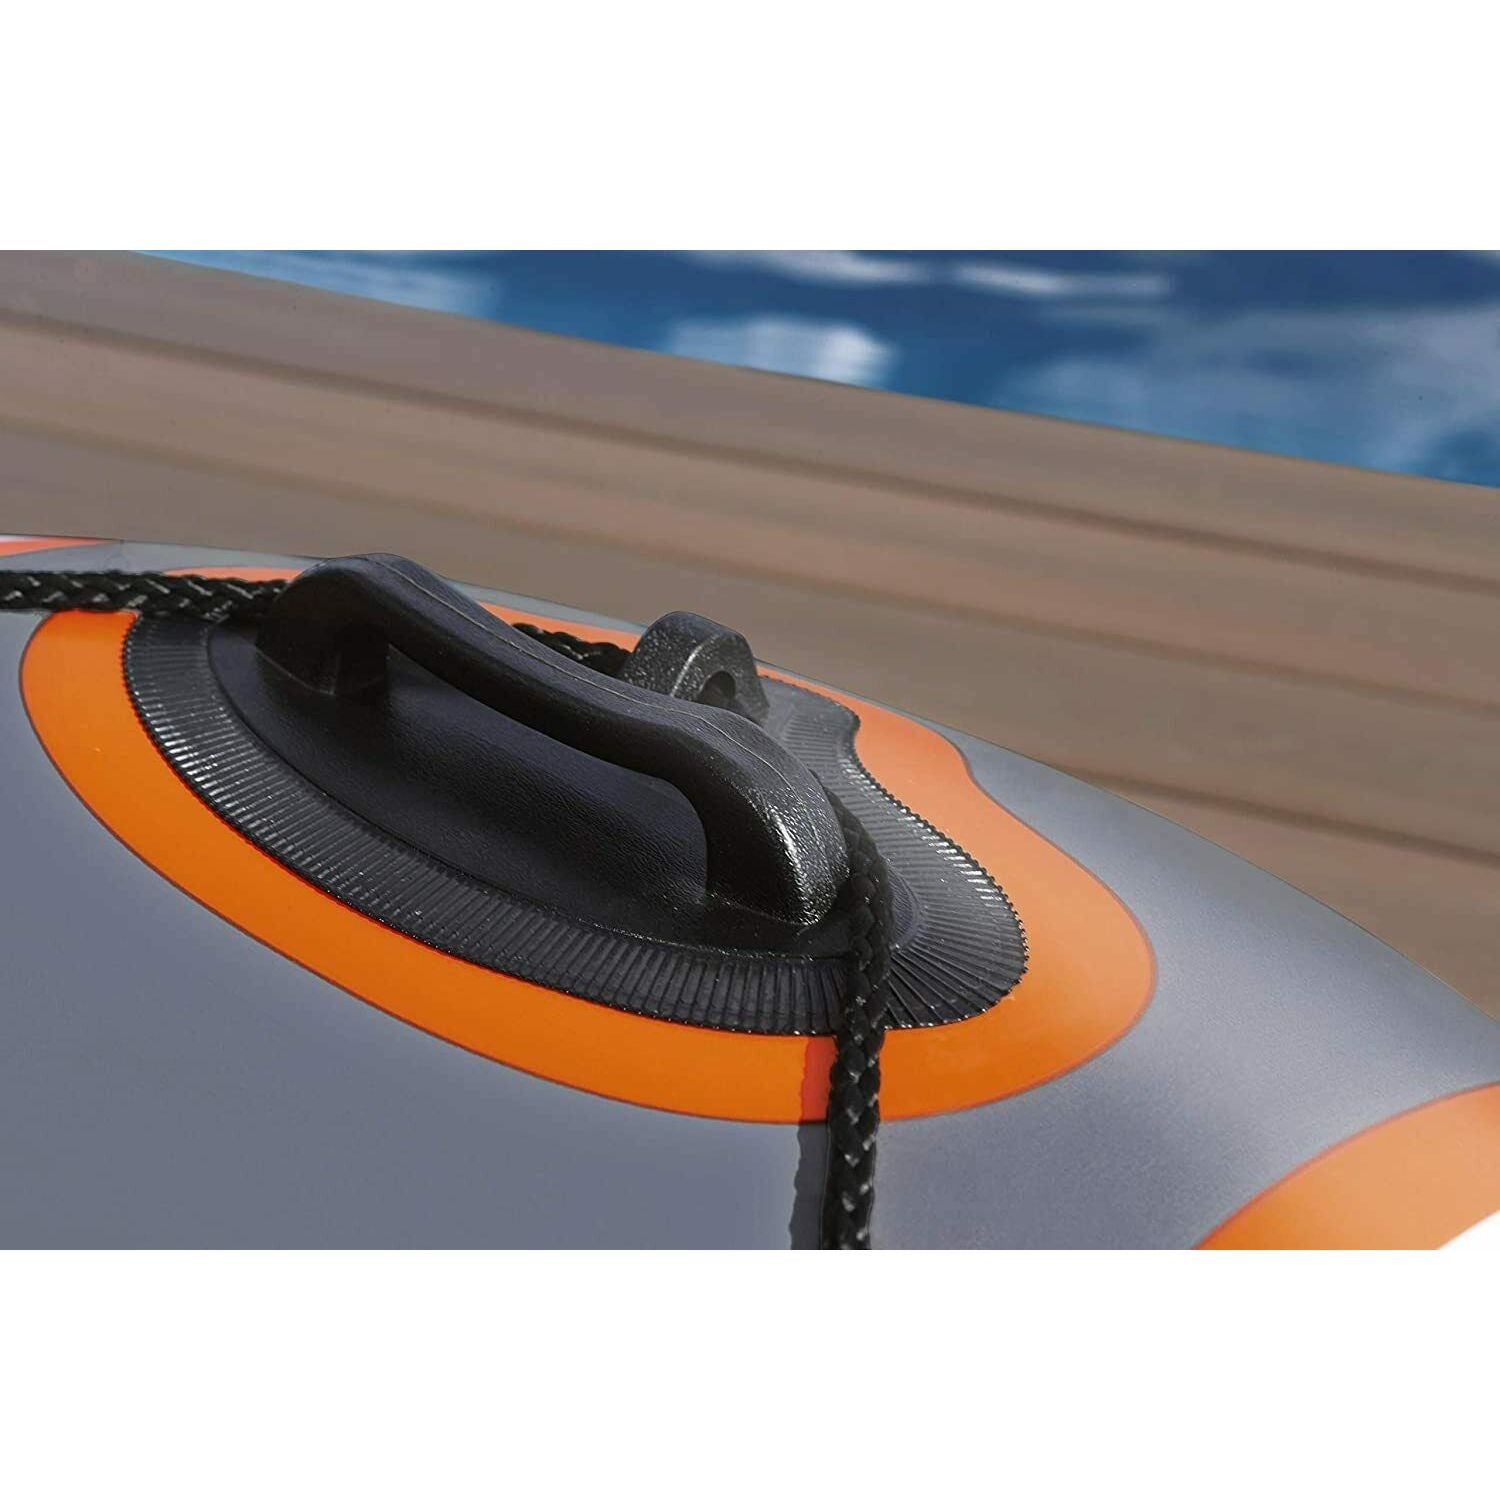 Bestway® inflatable boat paddle boat set 2 paddles + pump Kondor 2000 length